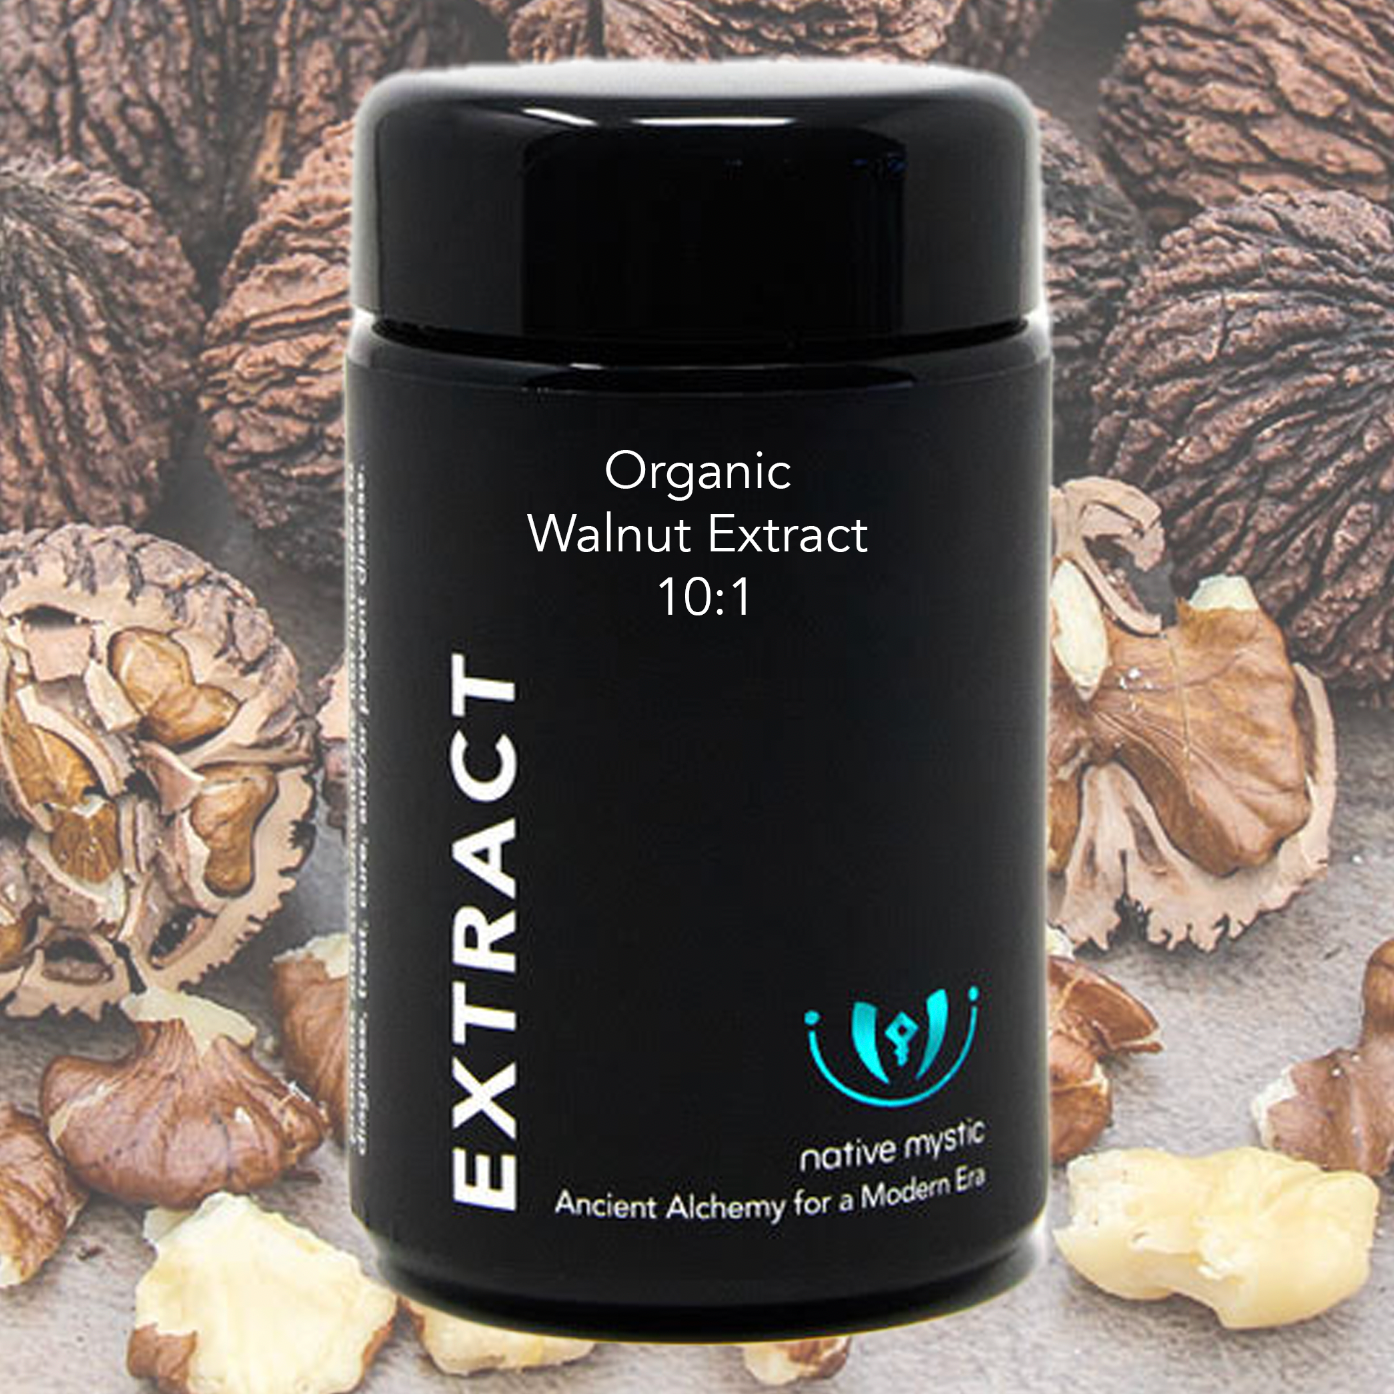 Organic Walnut Extract 10:1